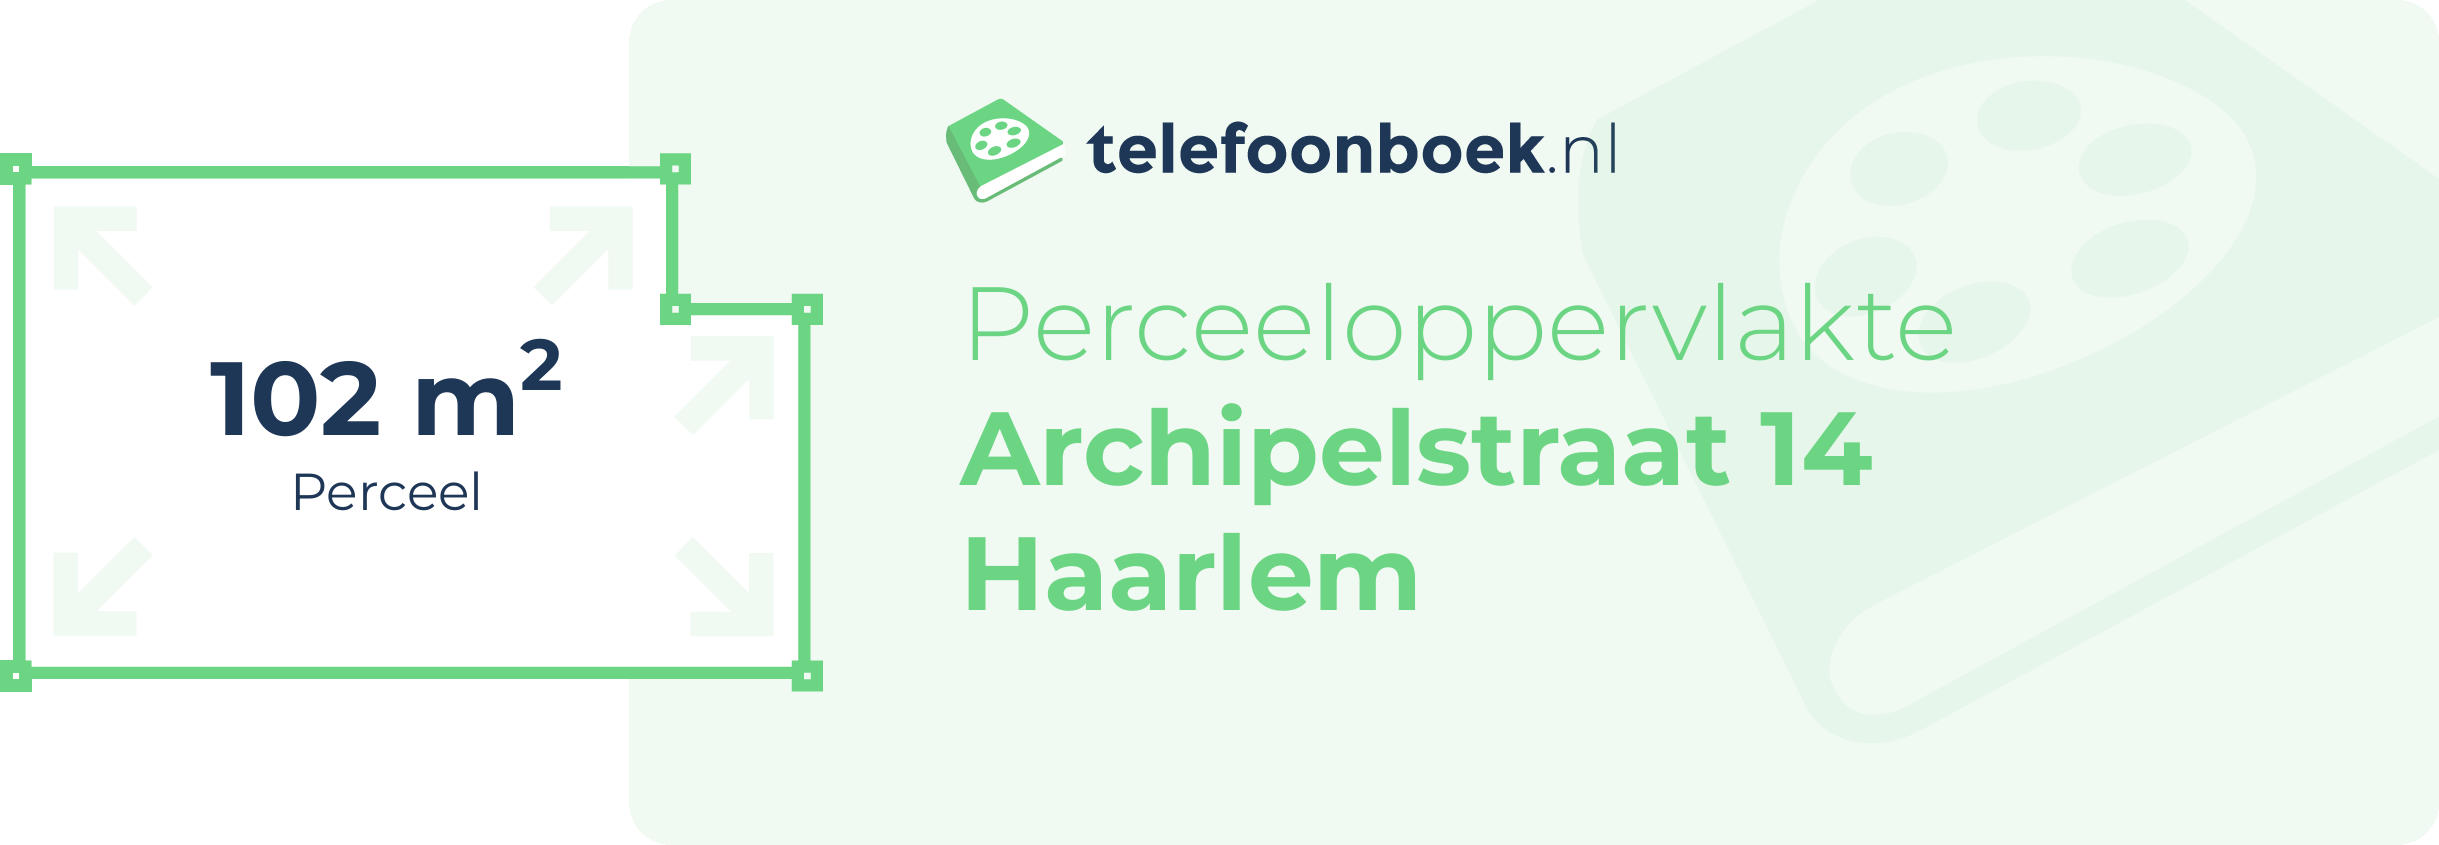 Perceeloppervlakte Archipelstraat 14 Haarlem